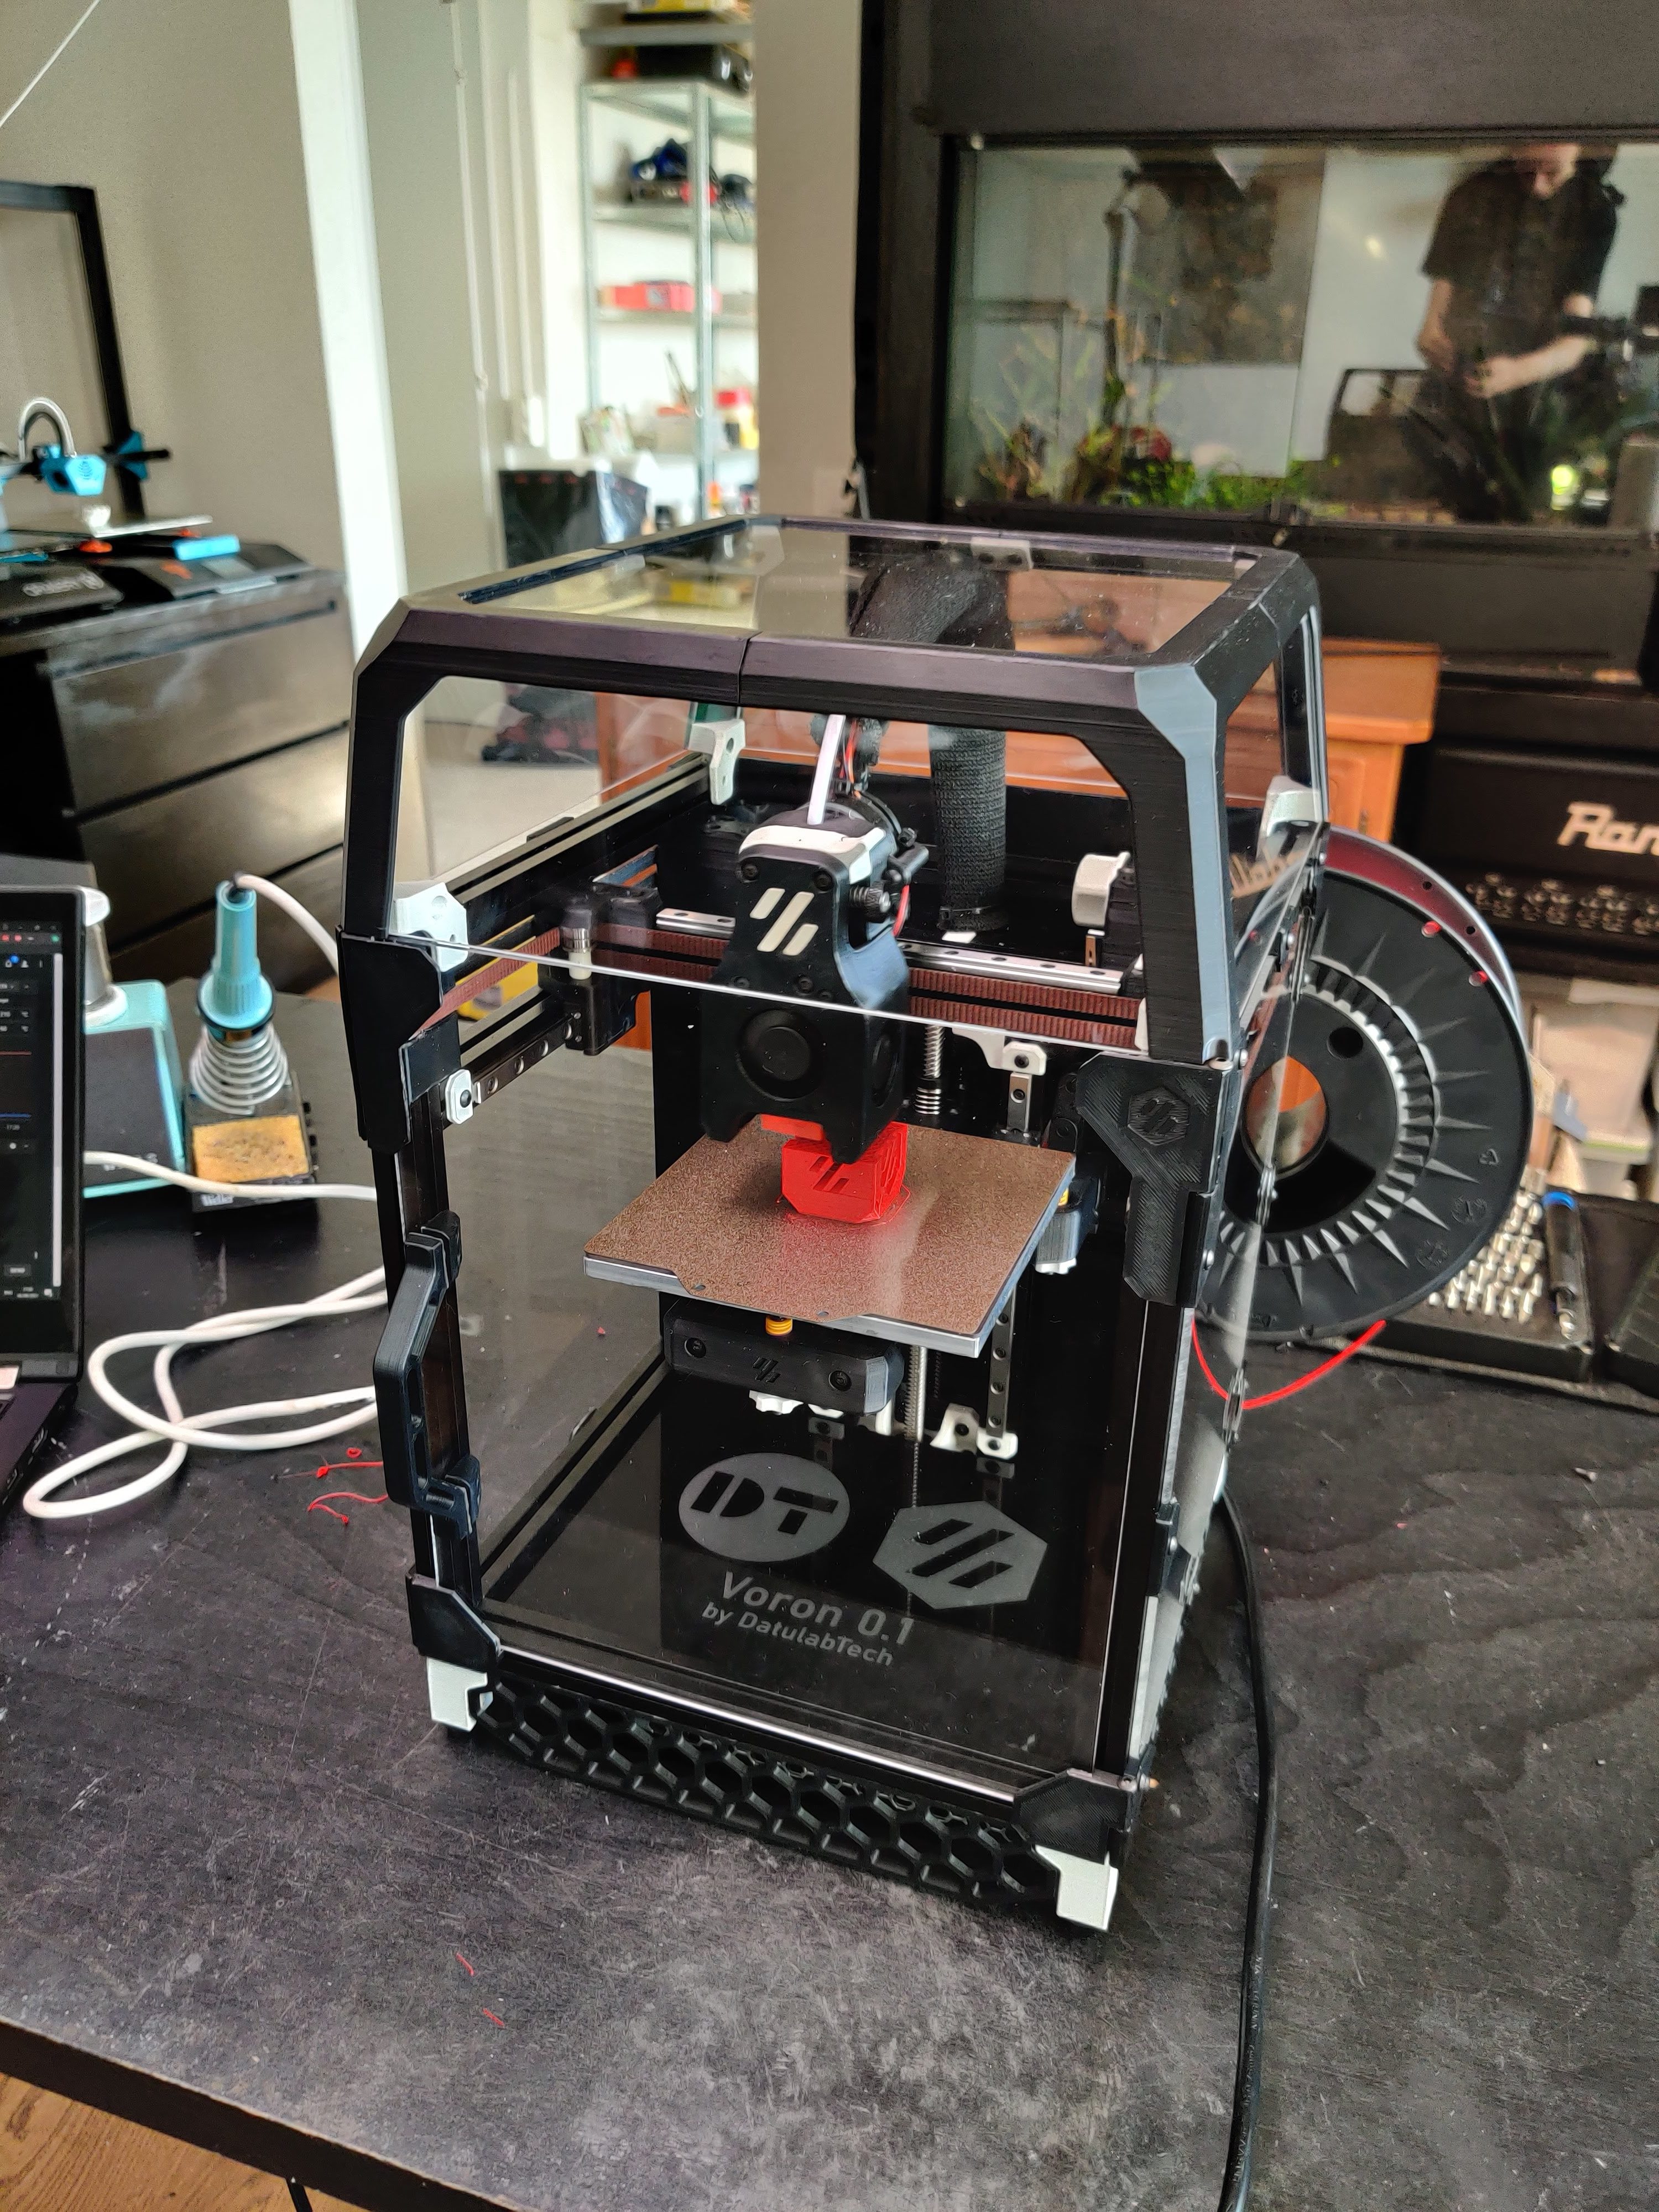 Creality CR-X (Kit) review - Hobbyist large format 3D printer